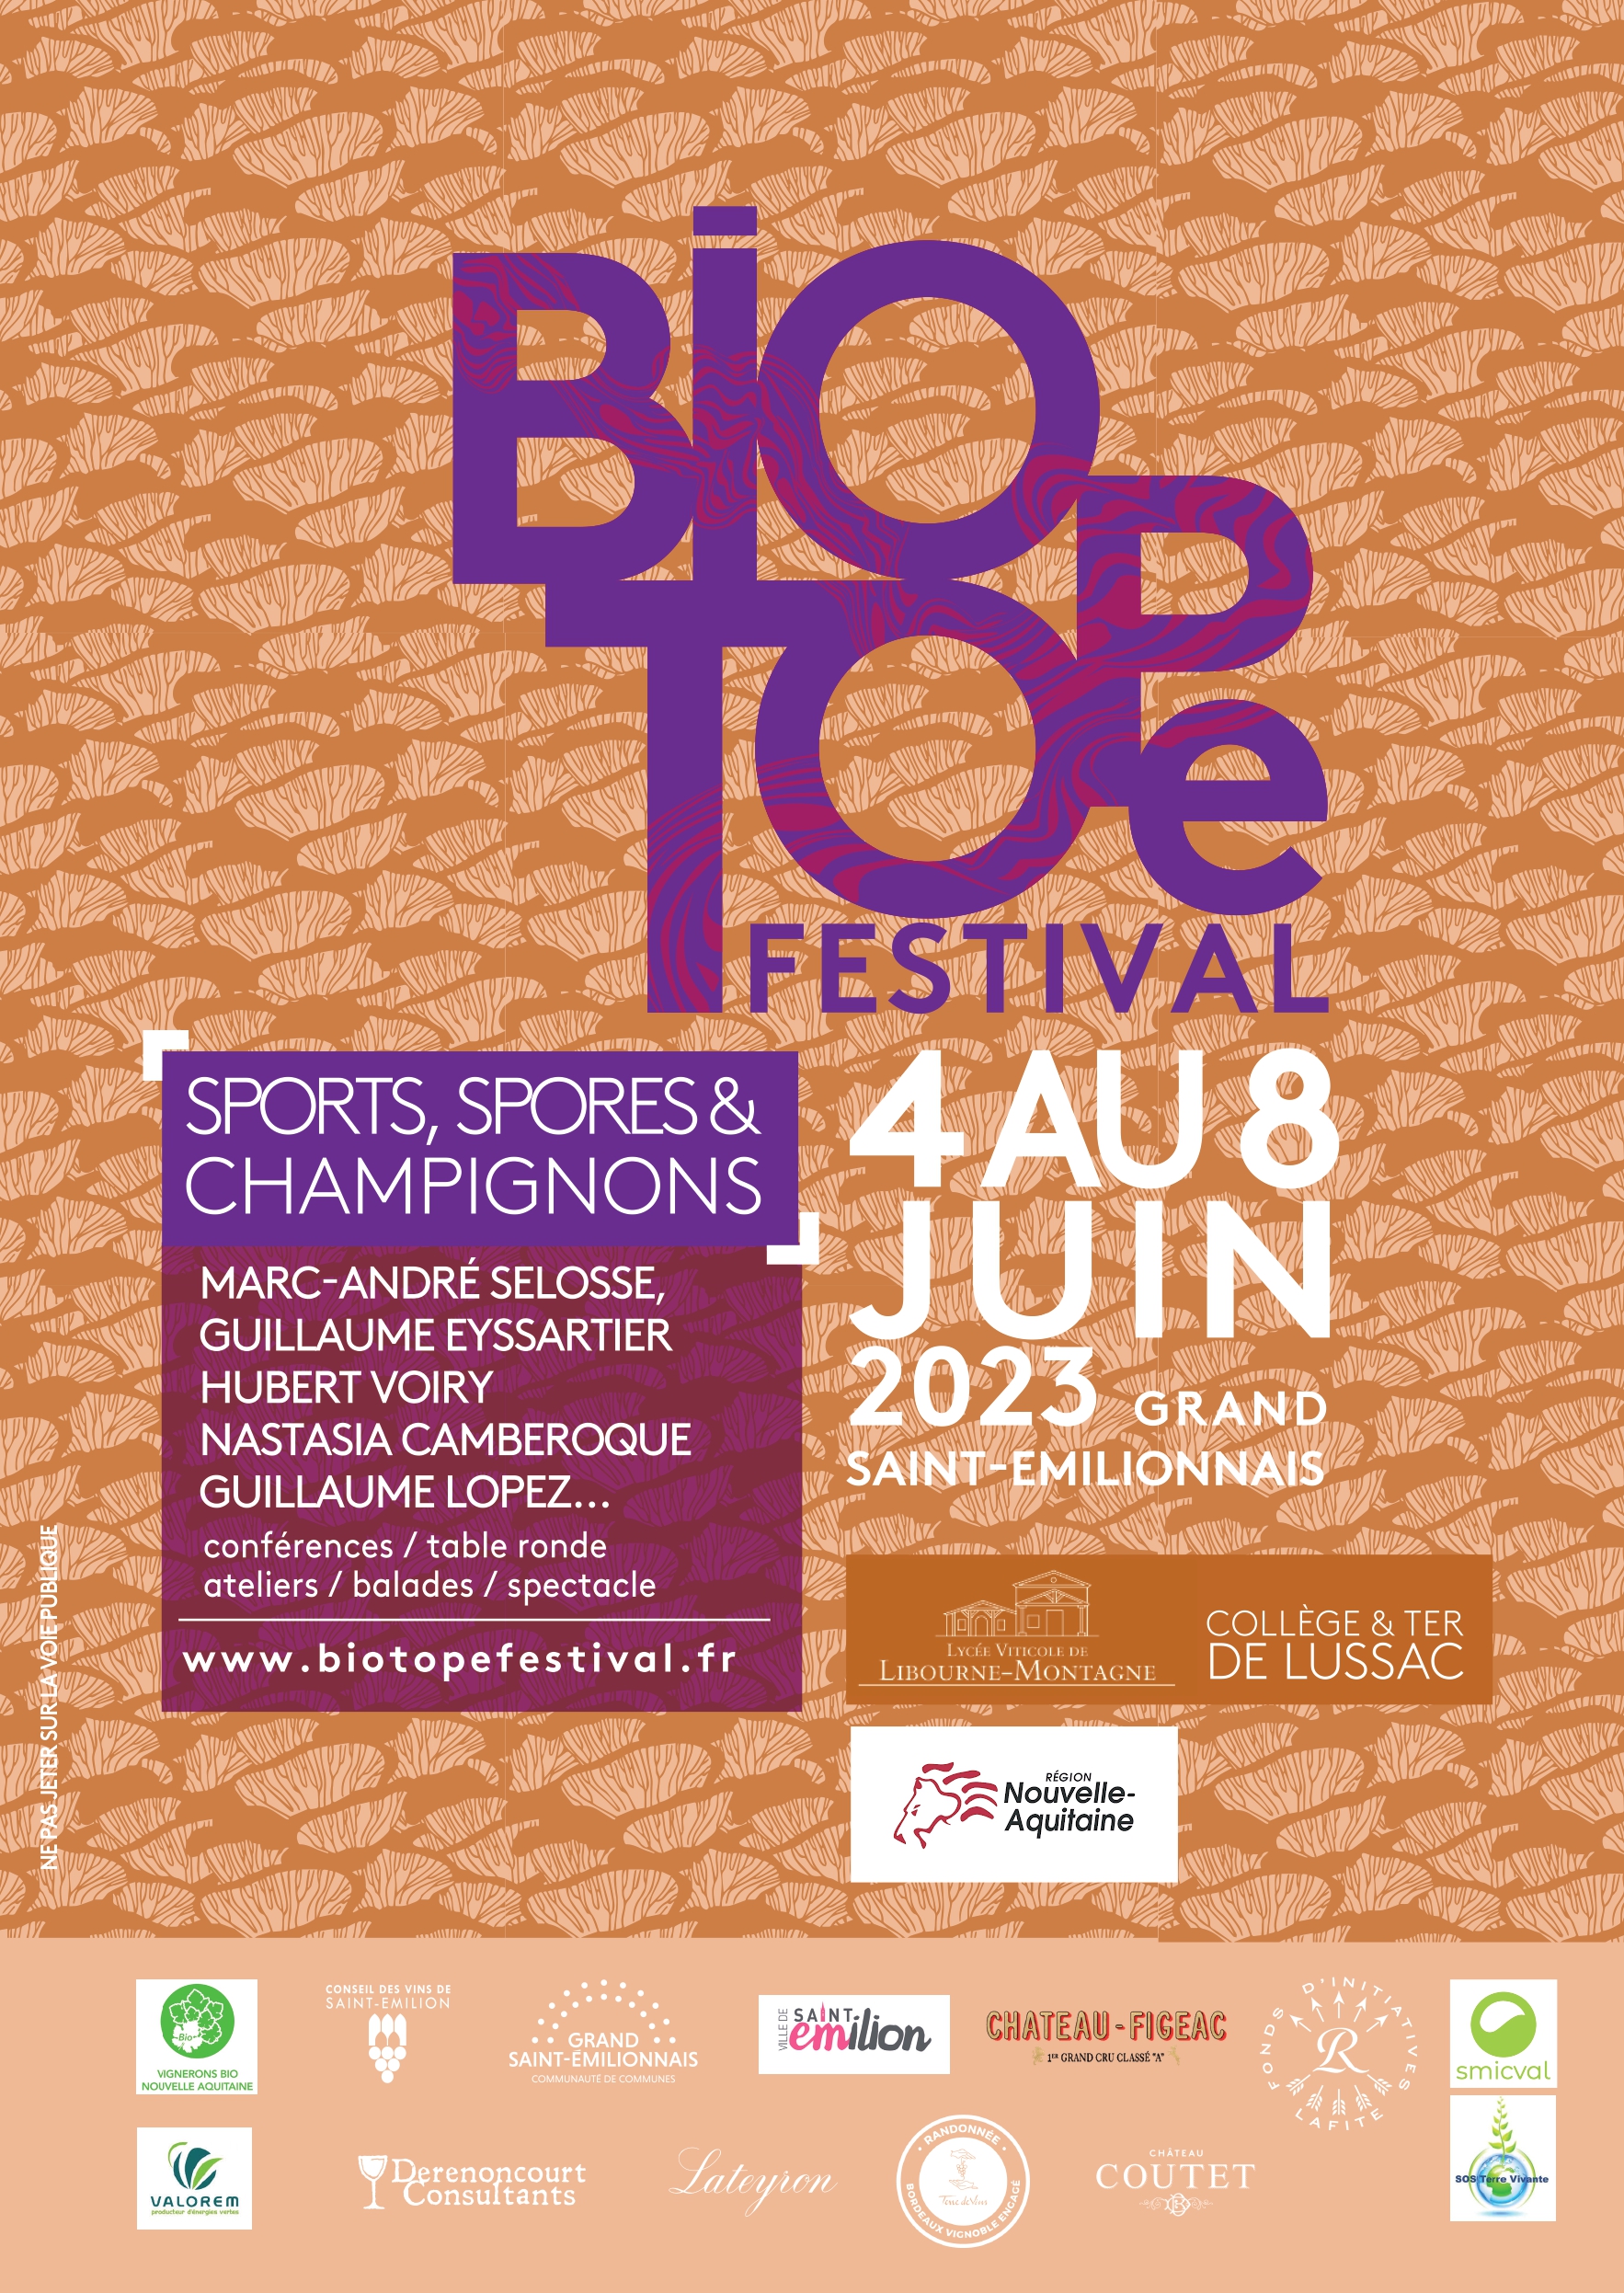 Biotope Festival